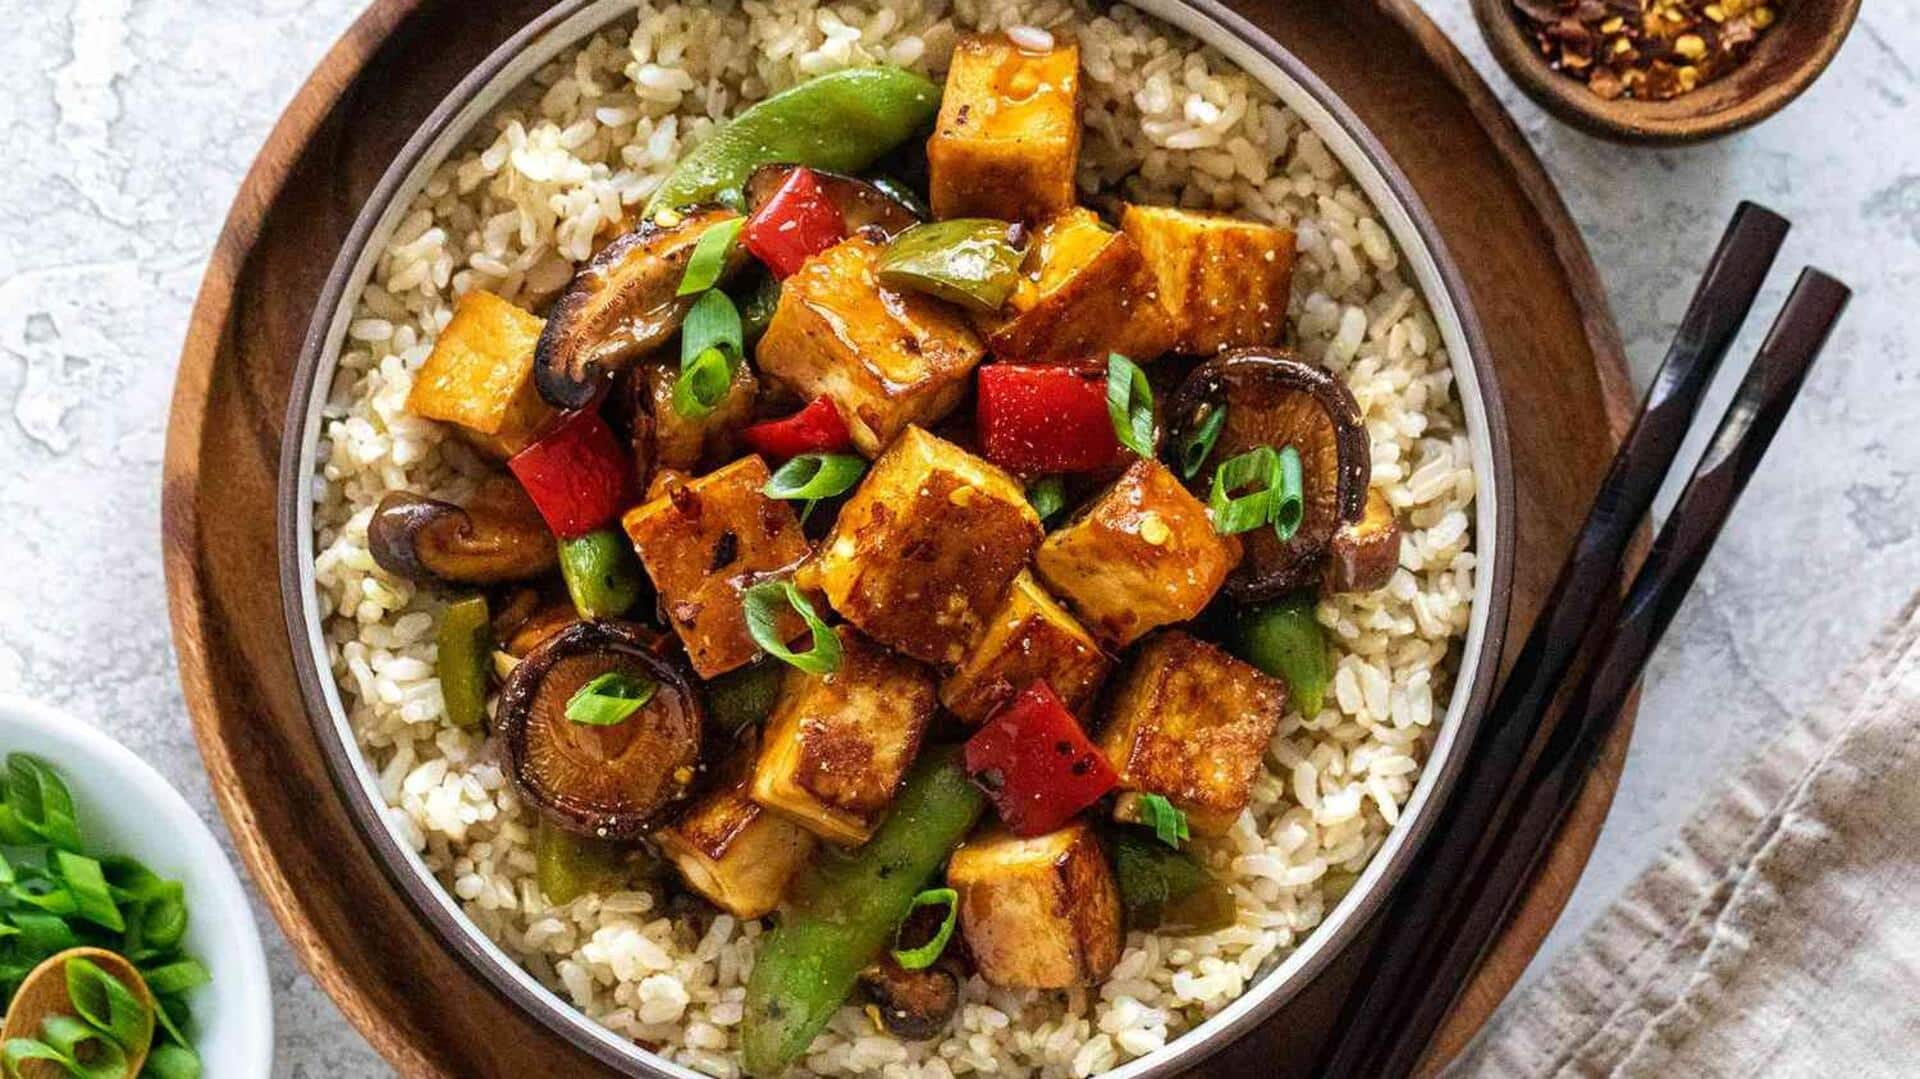 Recipe: Cook this delicious tofu stir-fry today